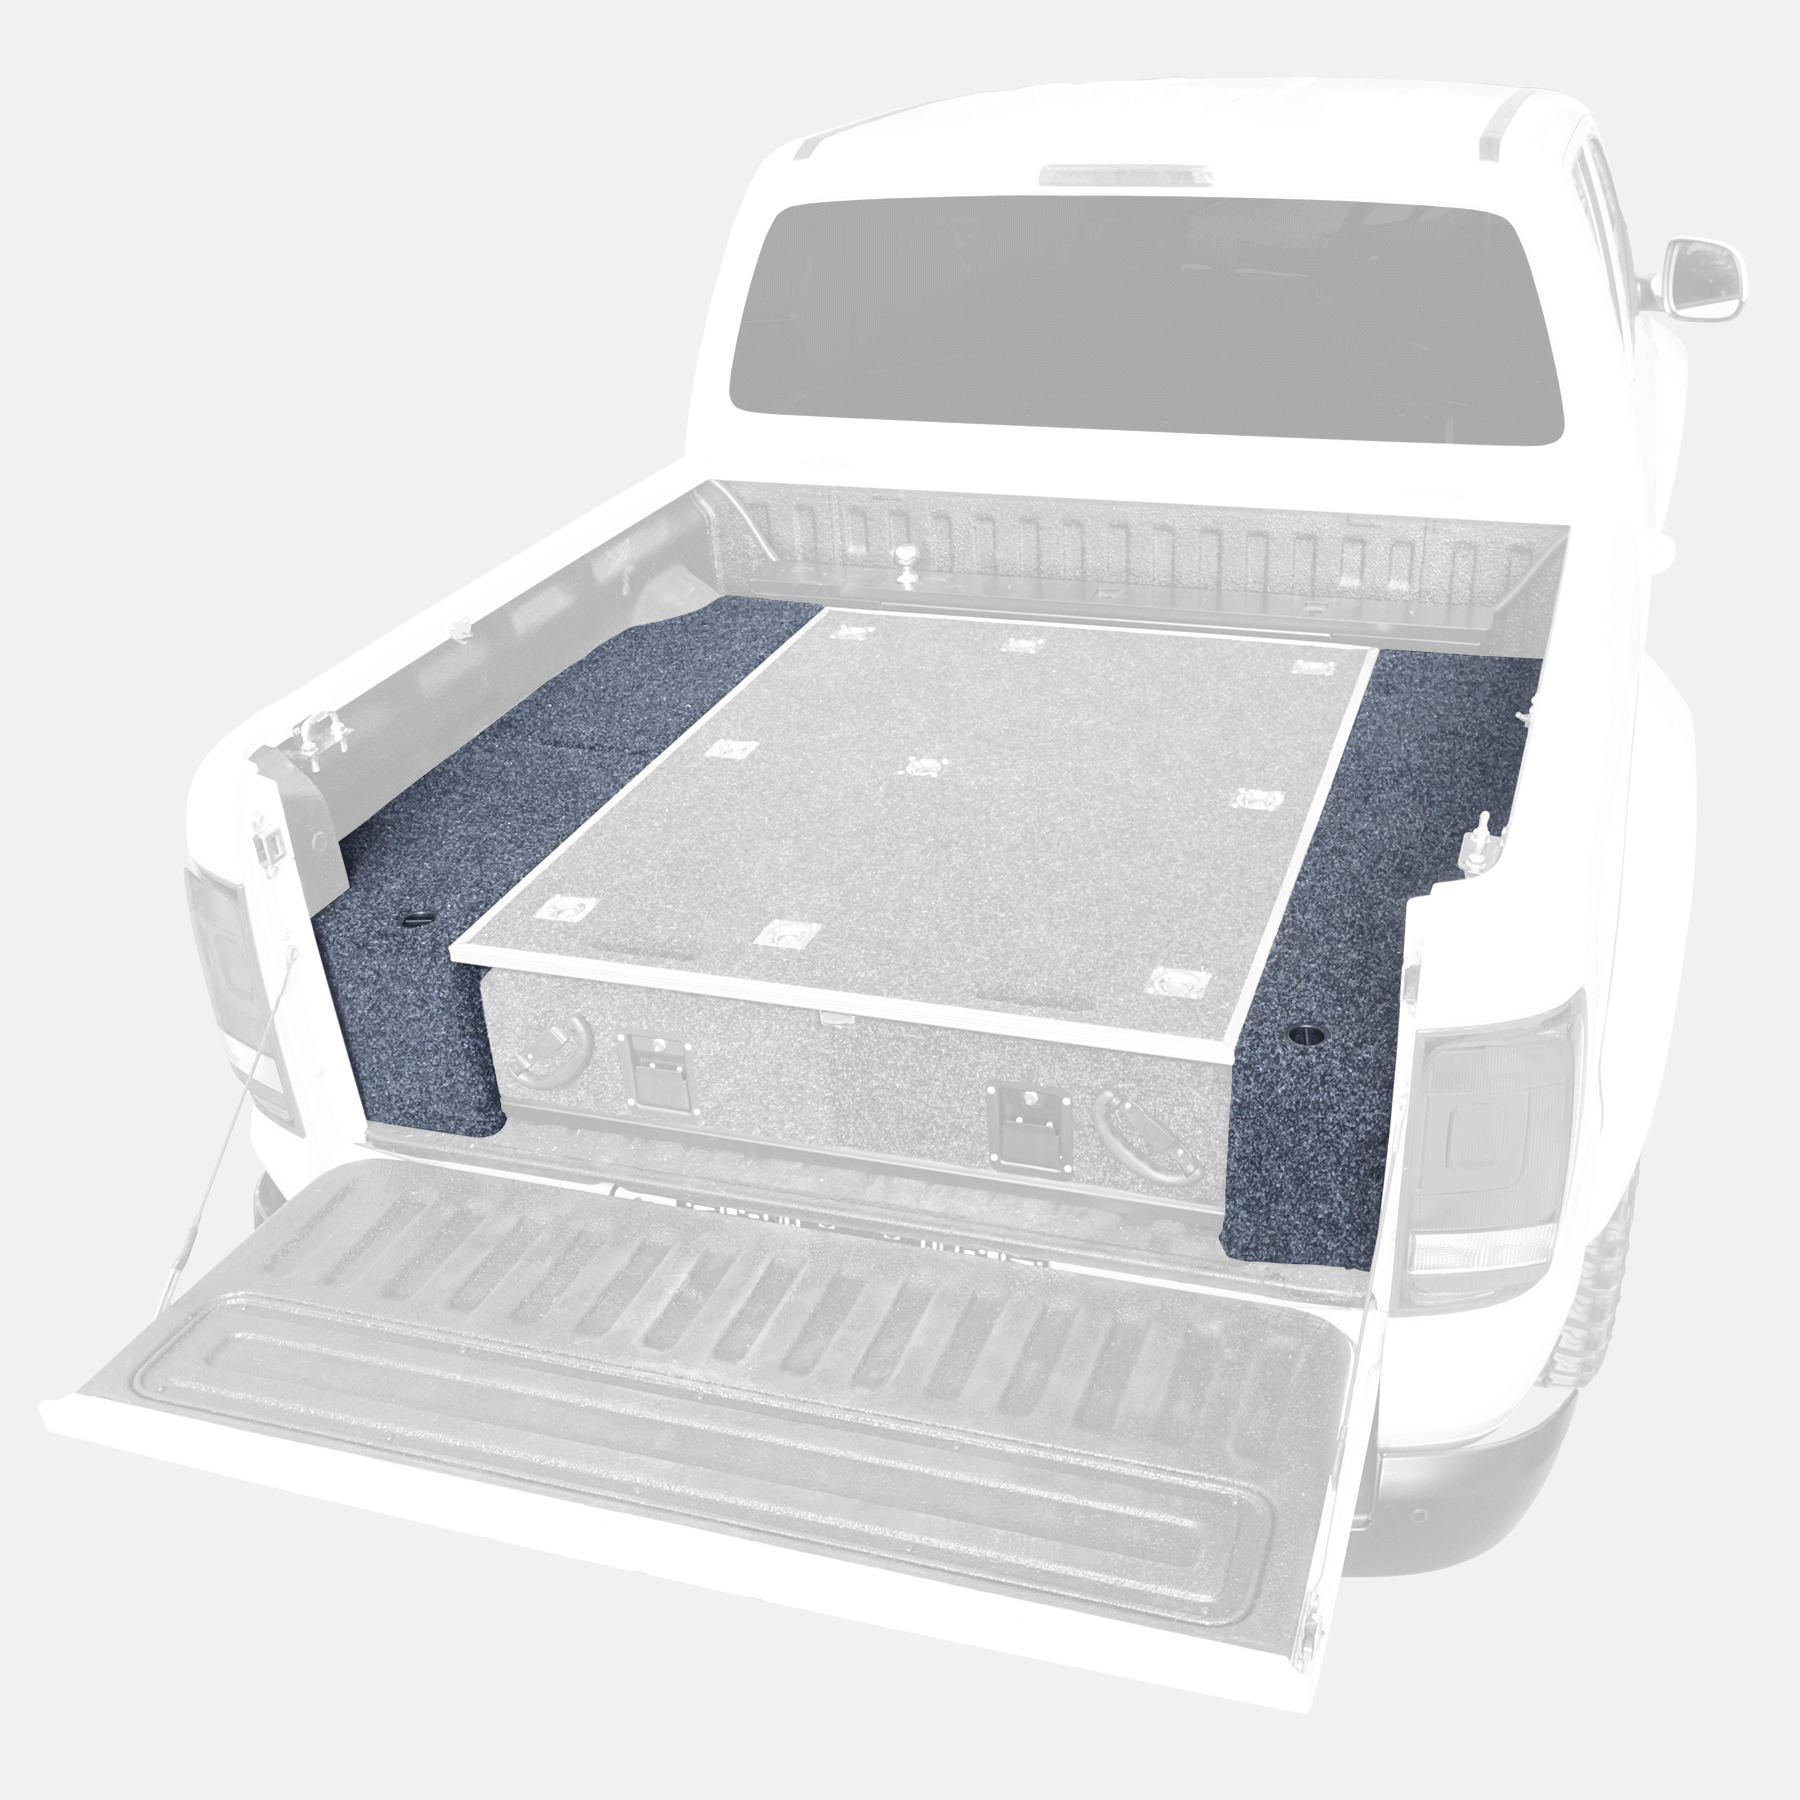 PickUp drawer side panels kit universal suitable for HCD130 series